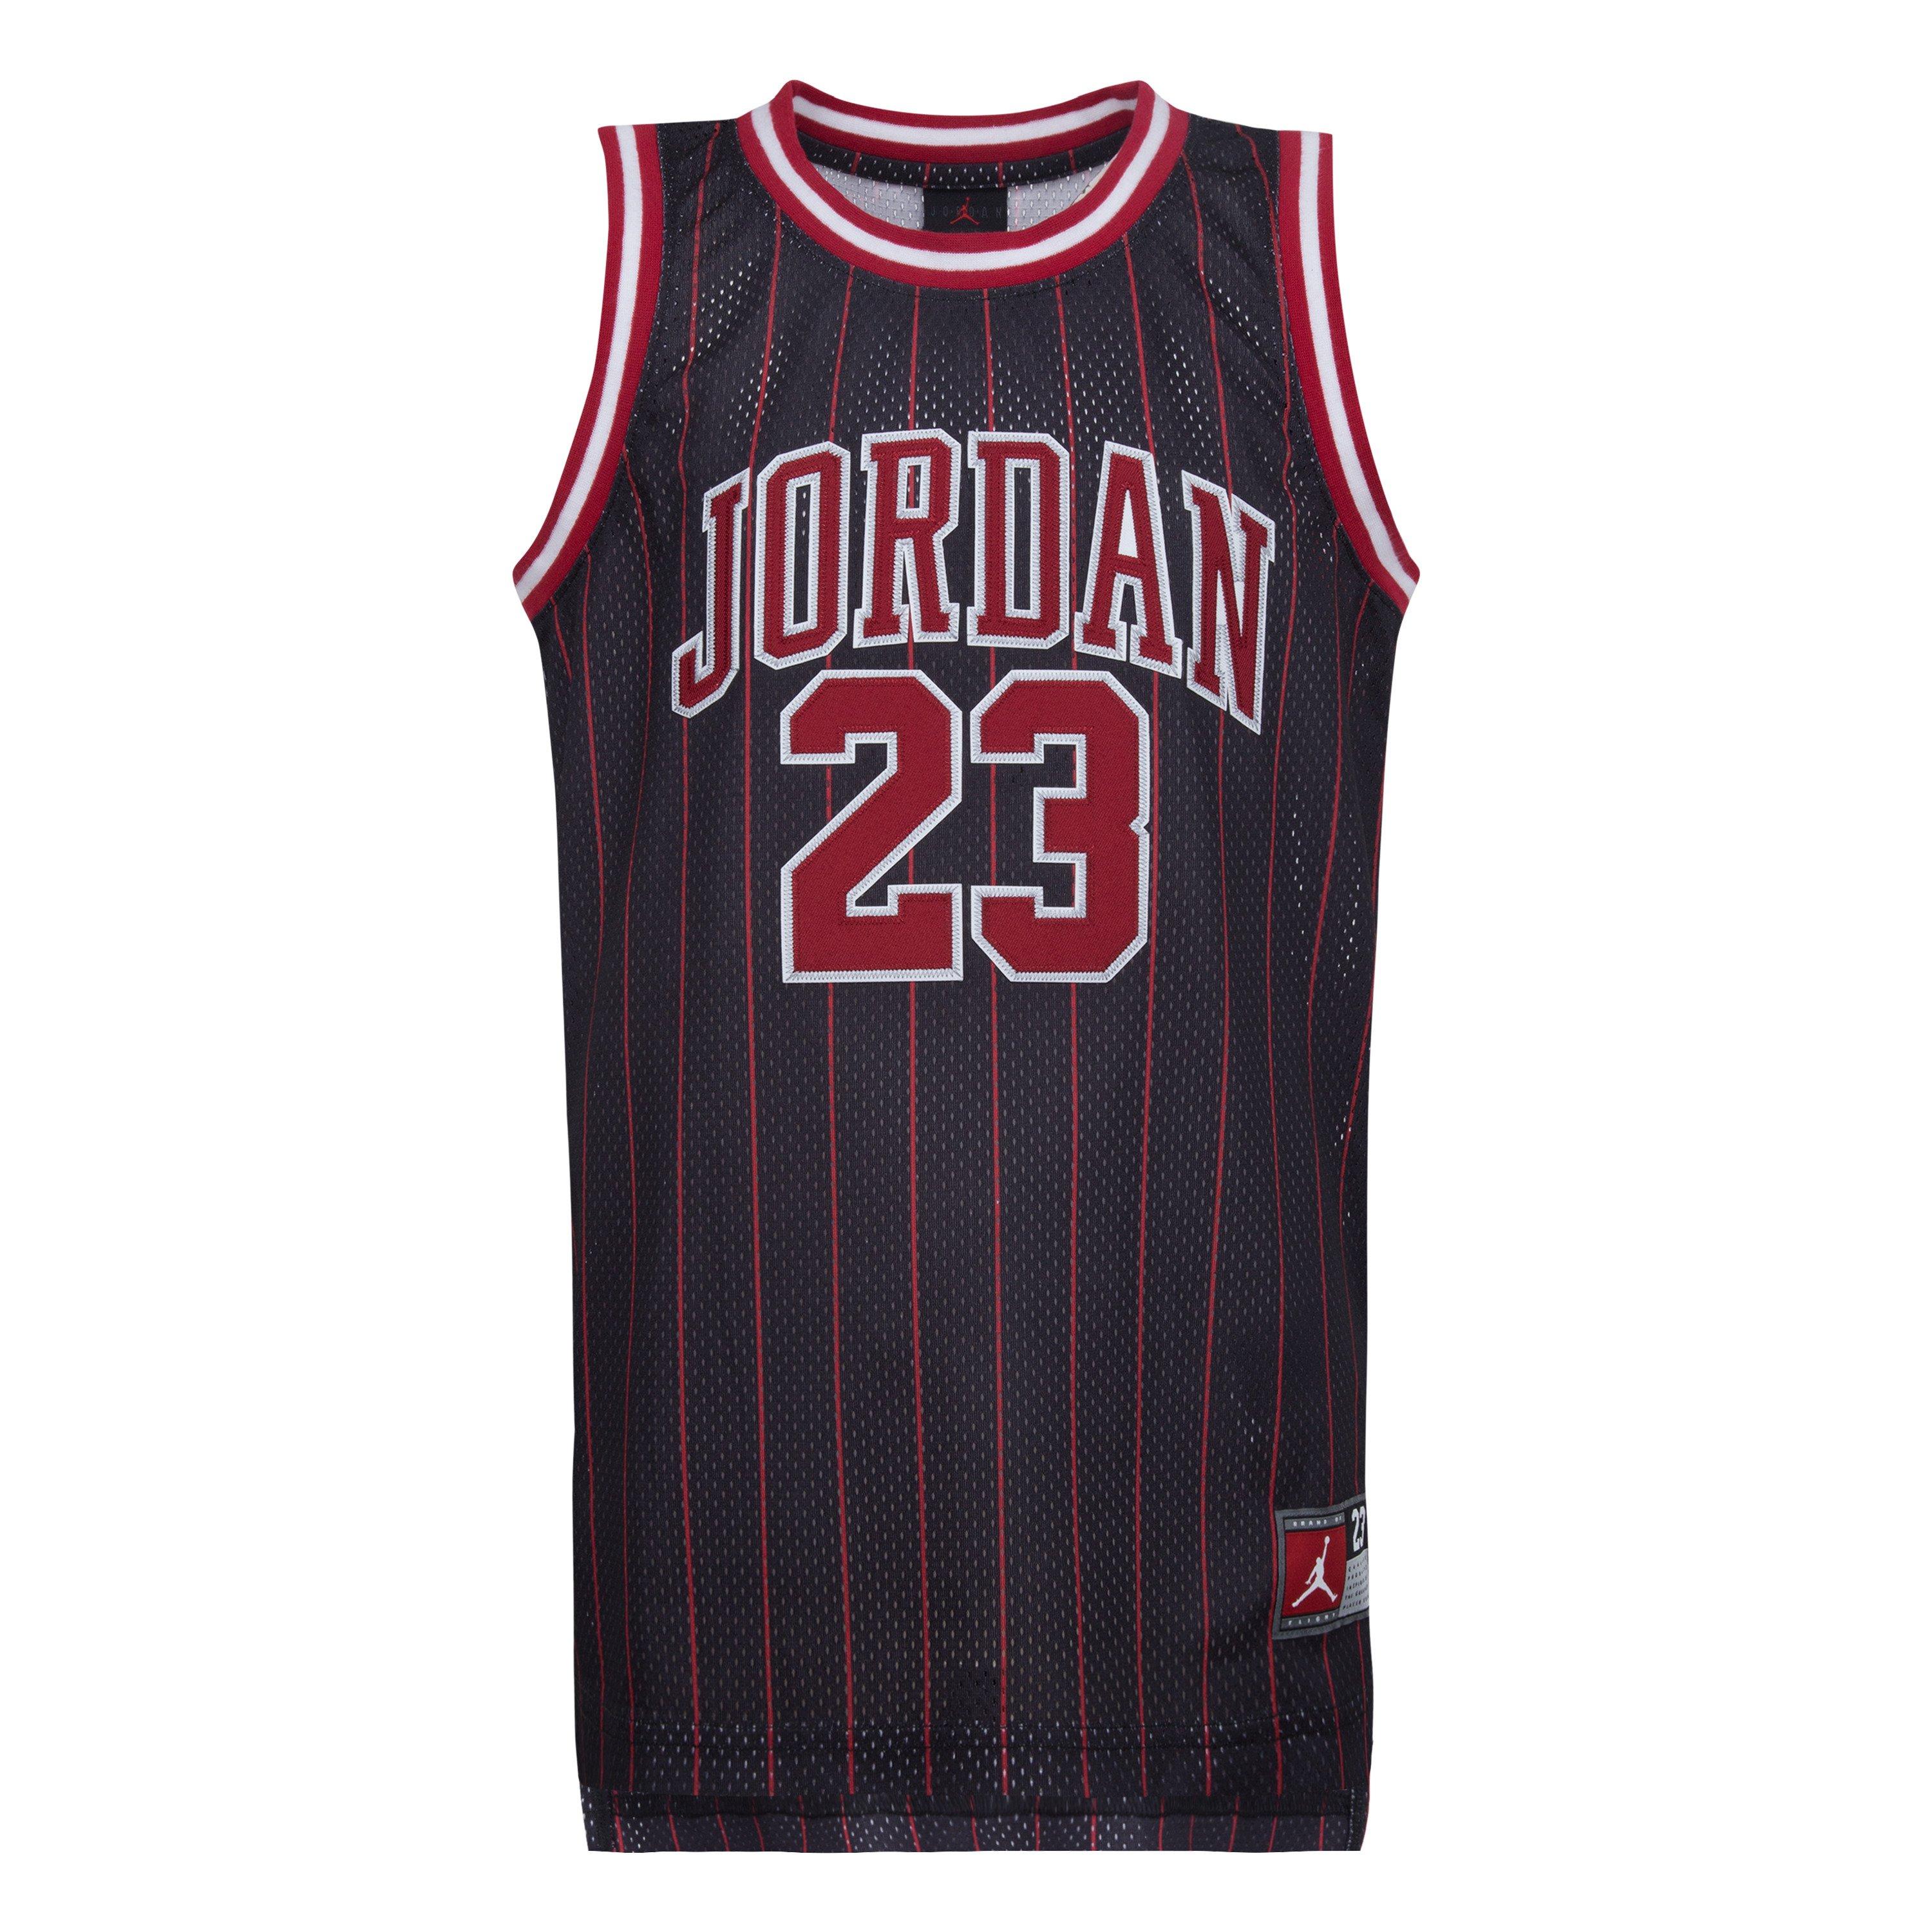 Bulls to wear retro Michael Jordan-inspired pinstripe jerseys this